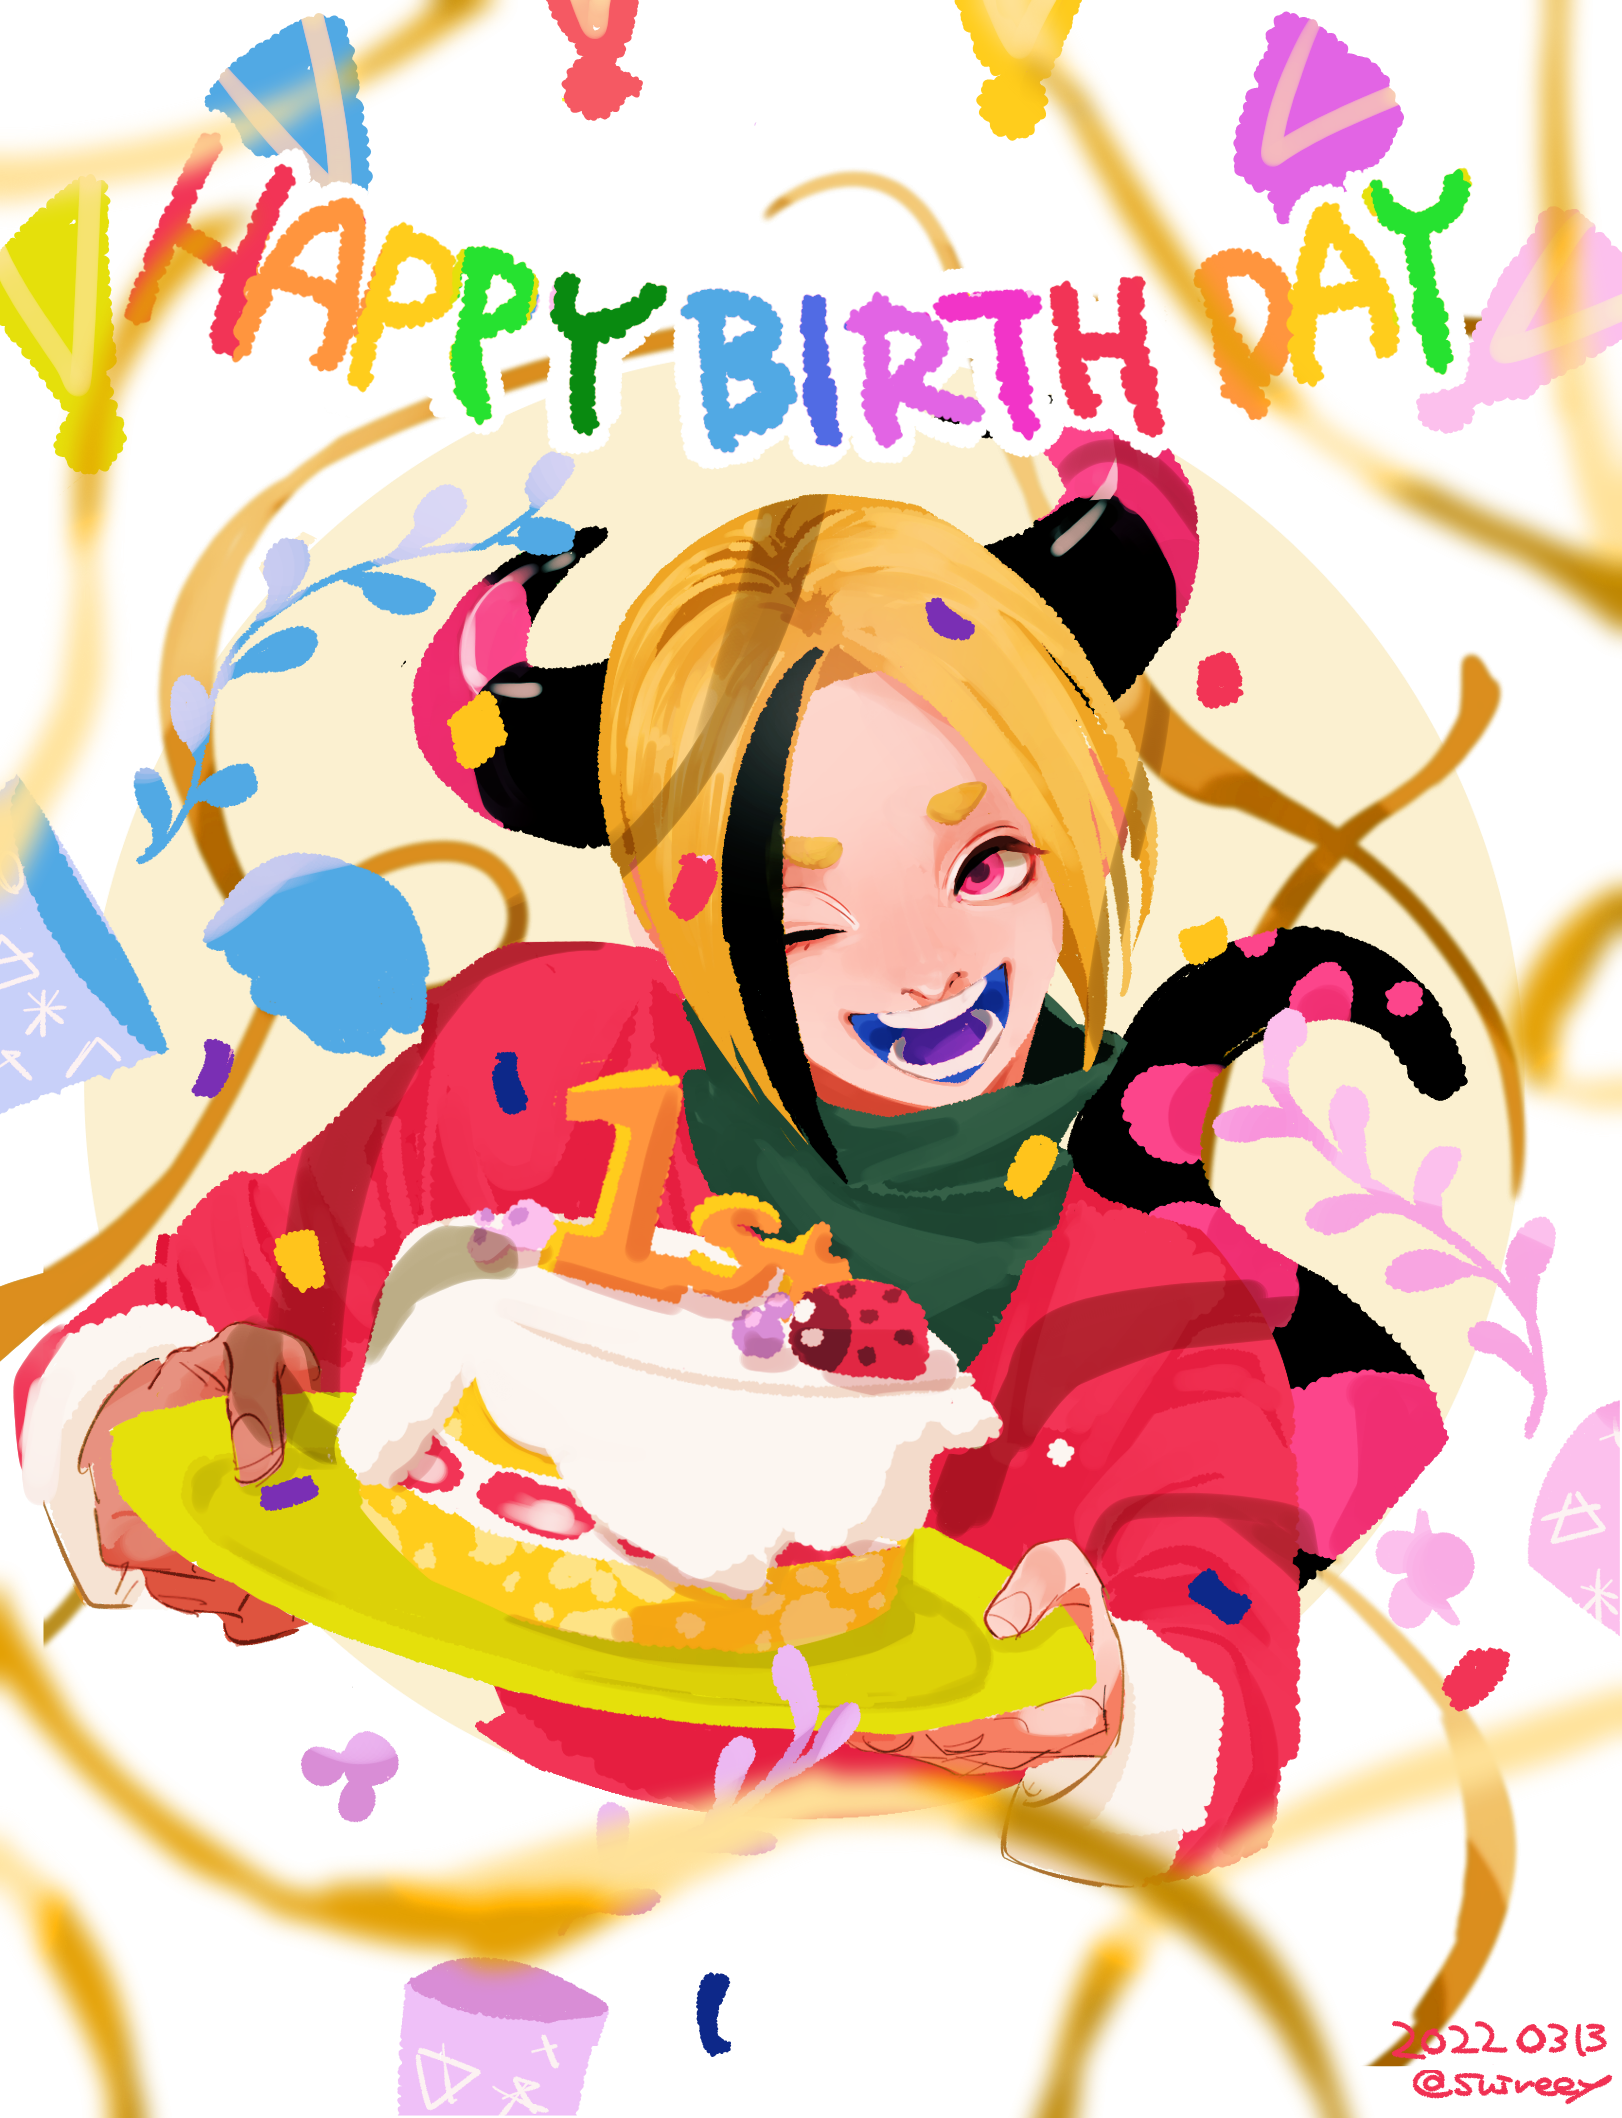 /happy birthday